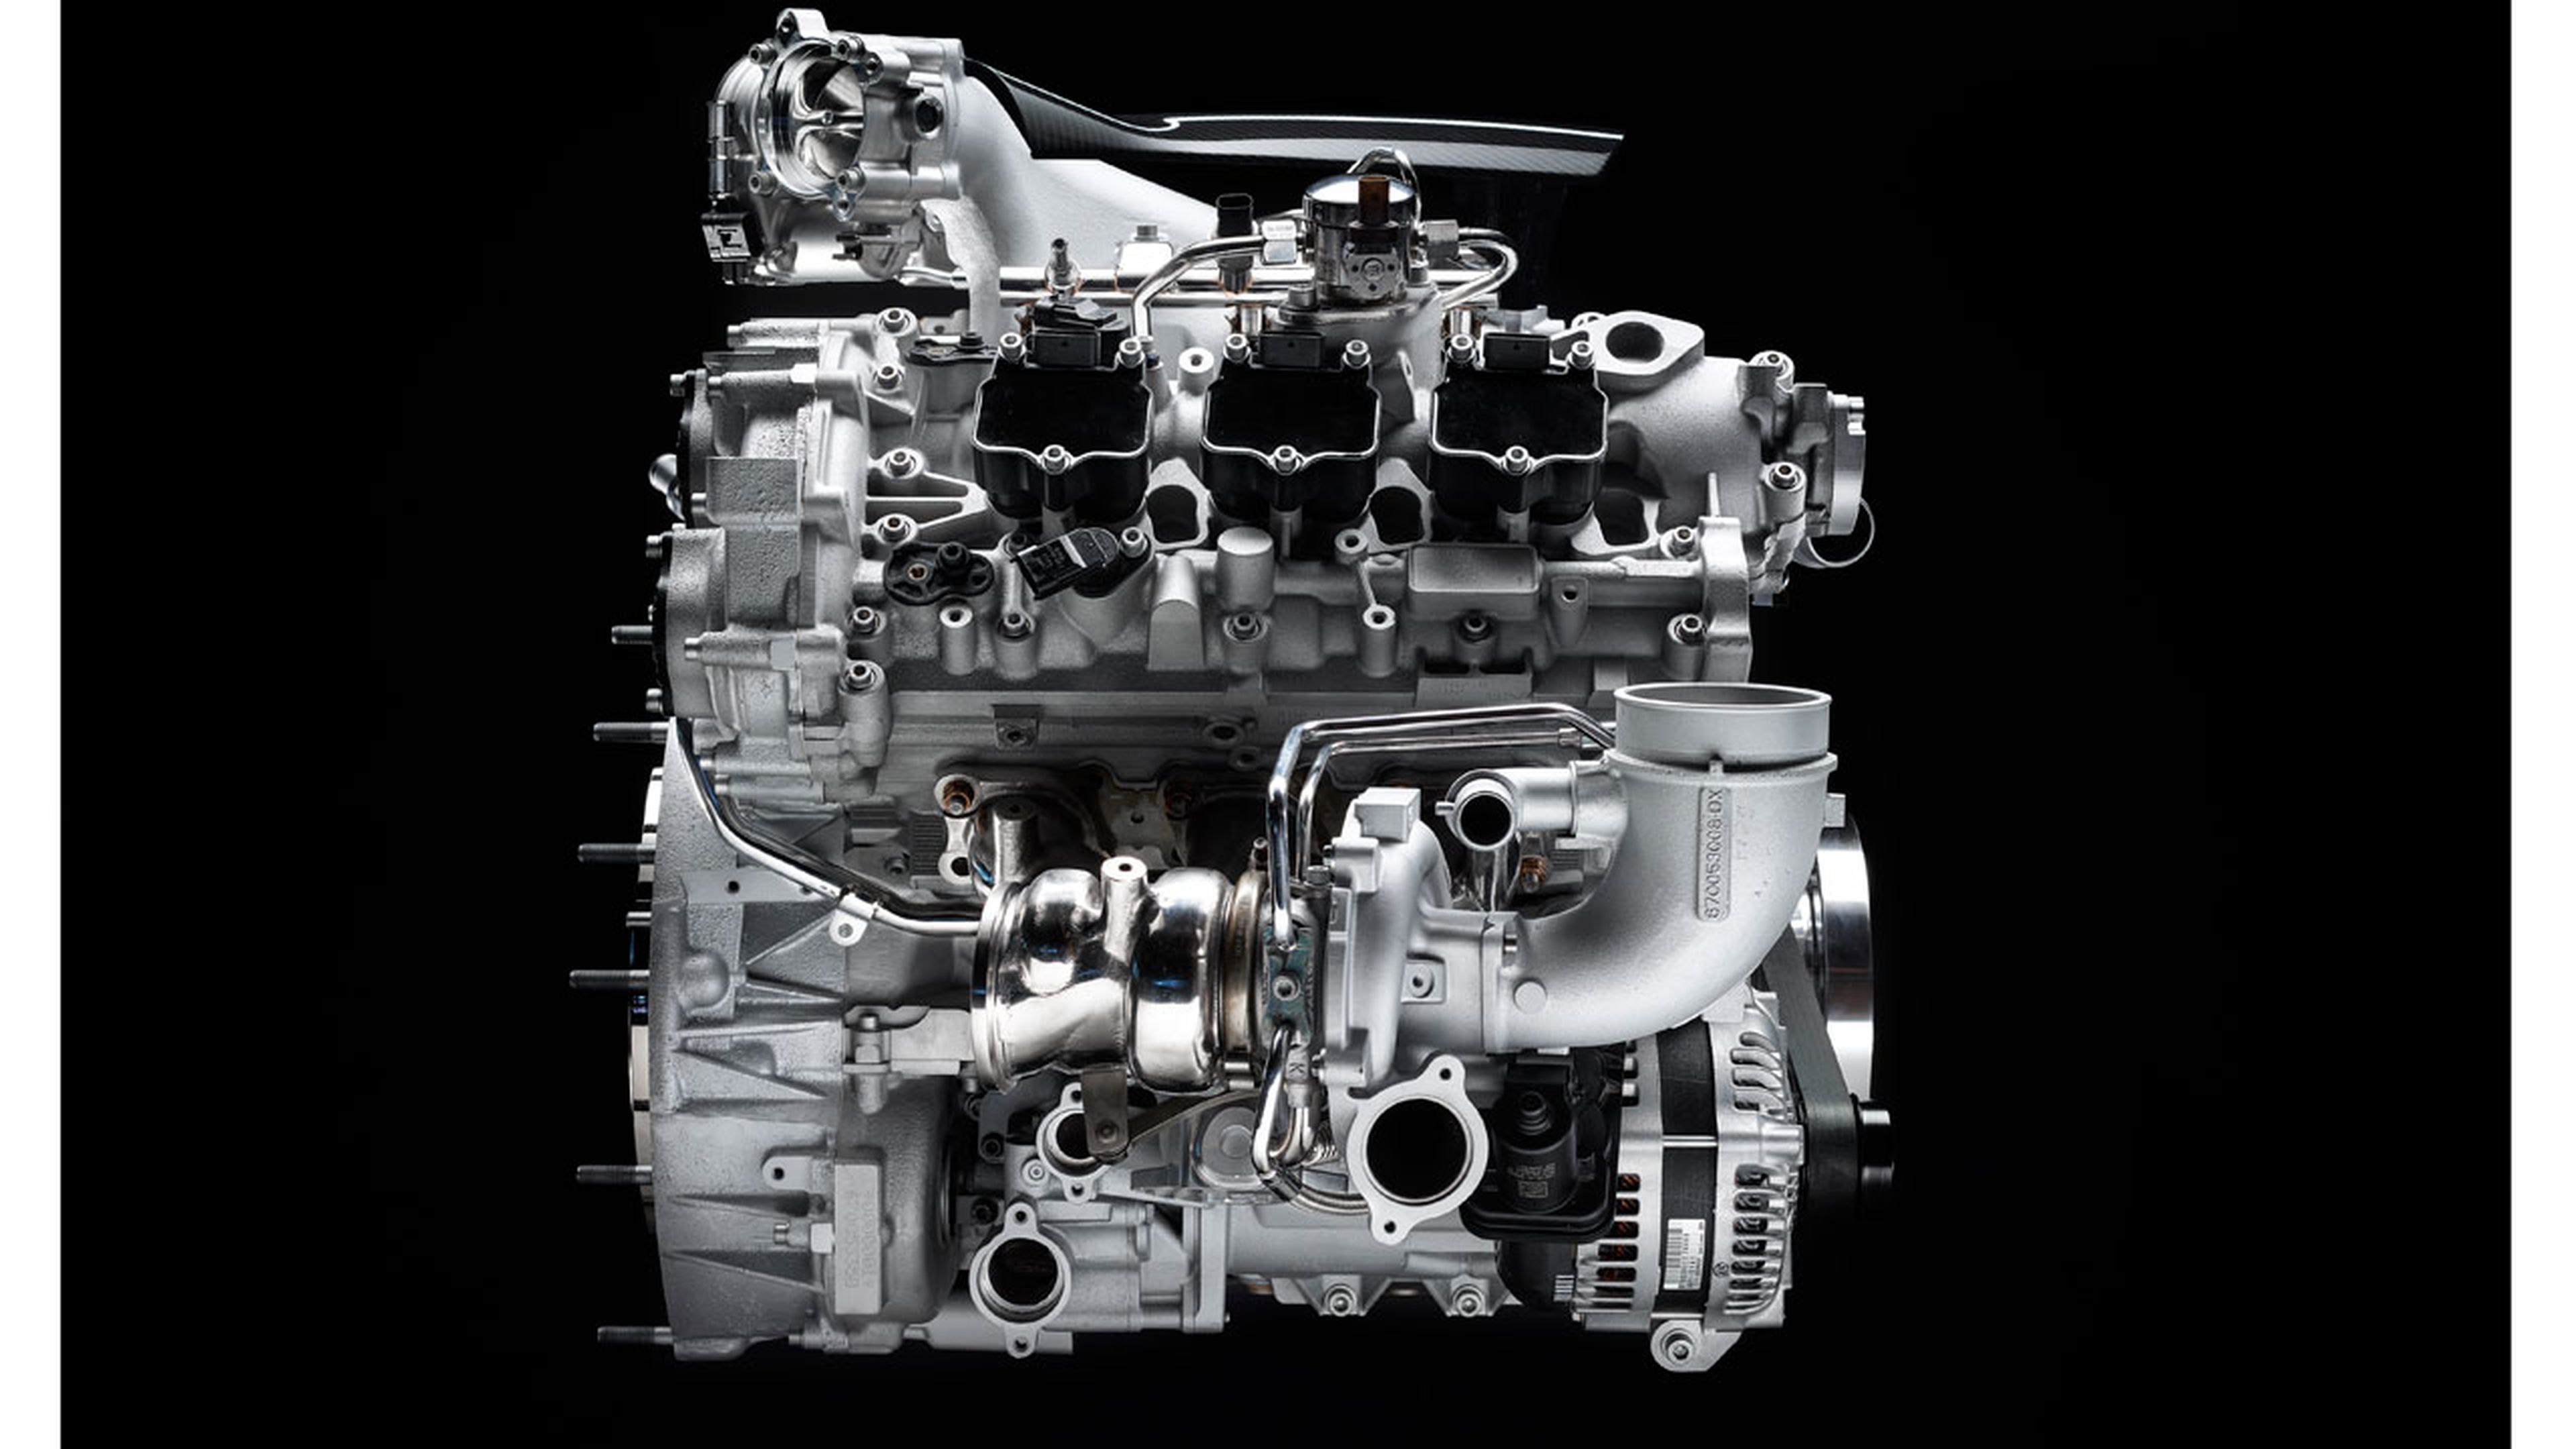 Motor Nettuno de Maserati